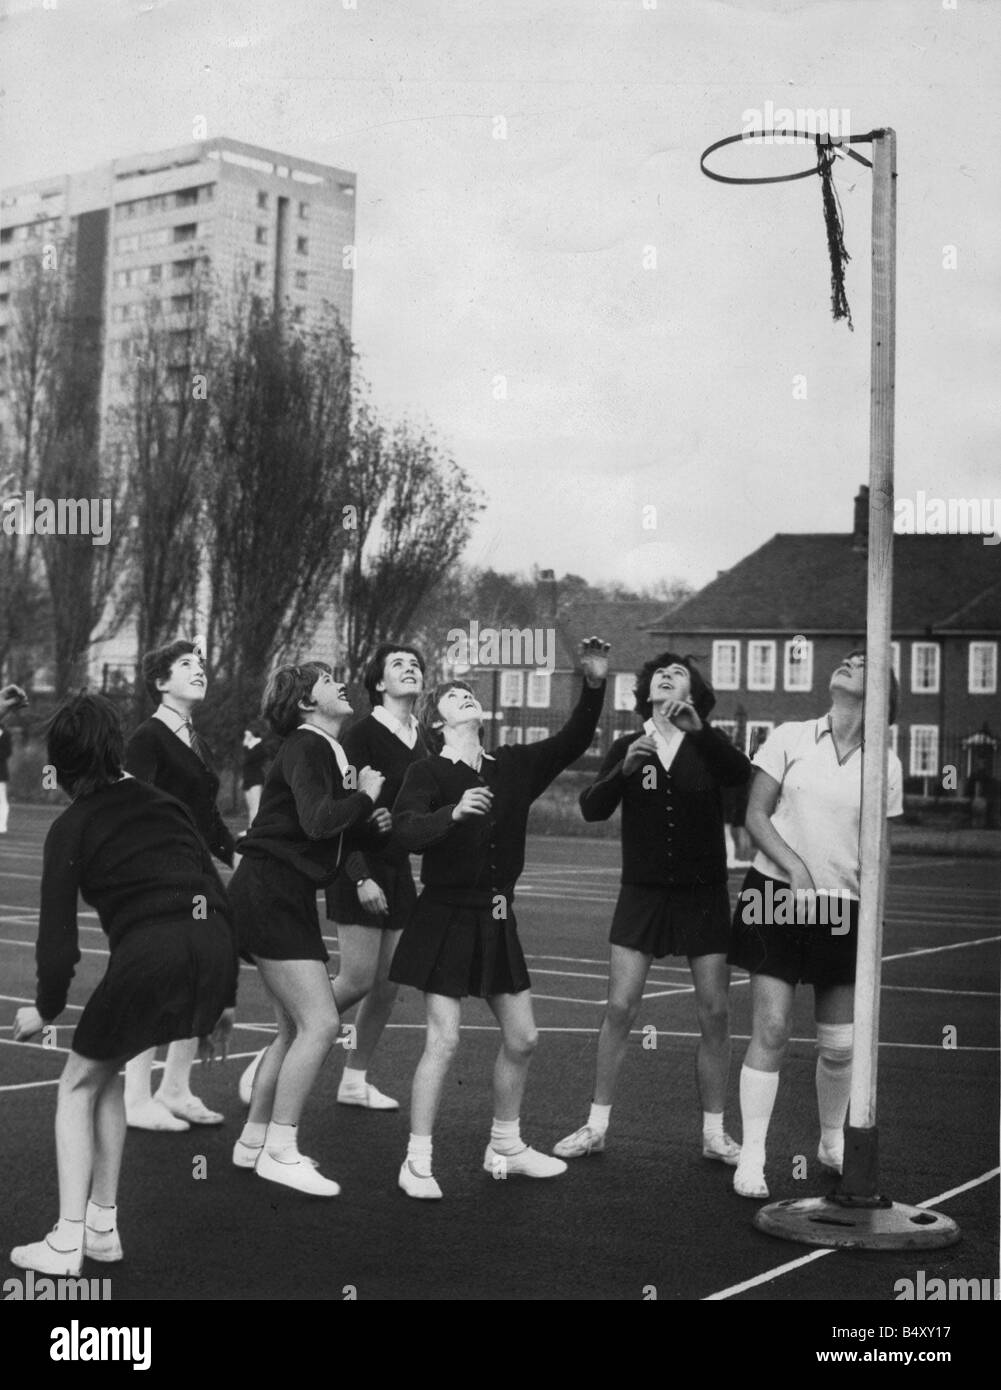 A netball lesson at Heaton school 01 6 1975 circa Stock Photo